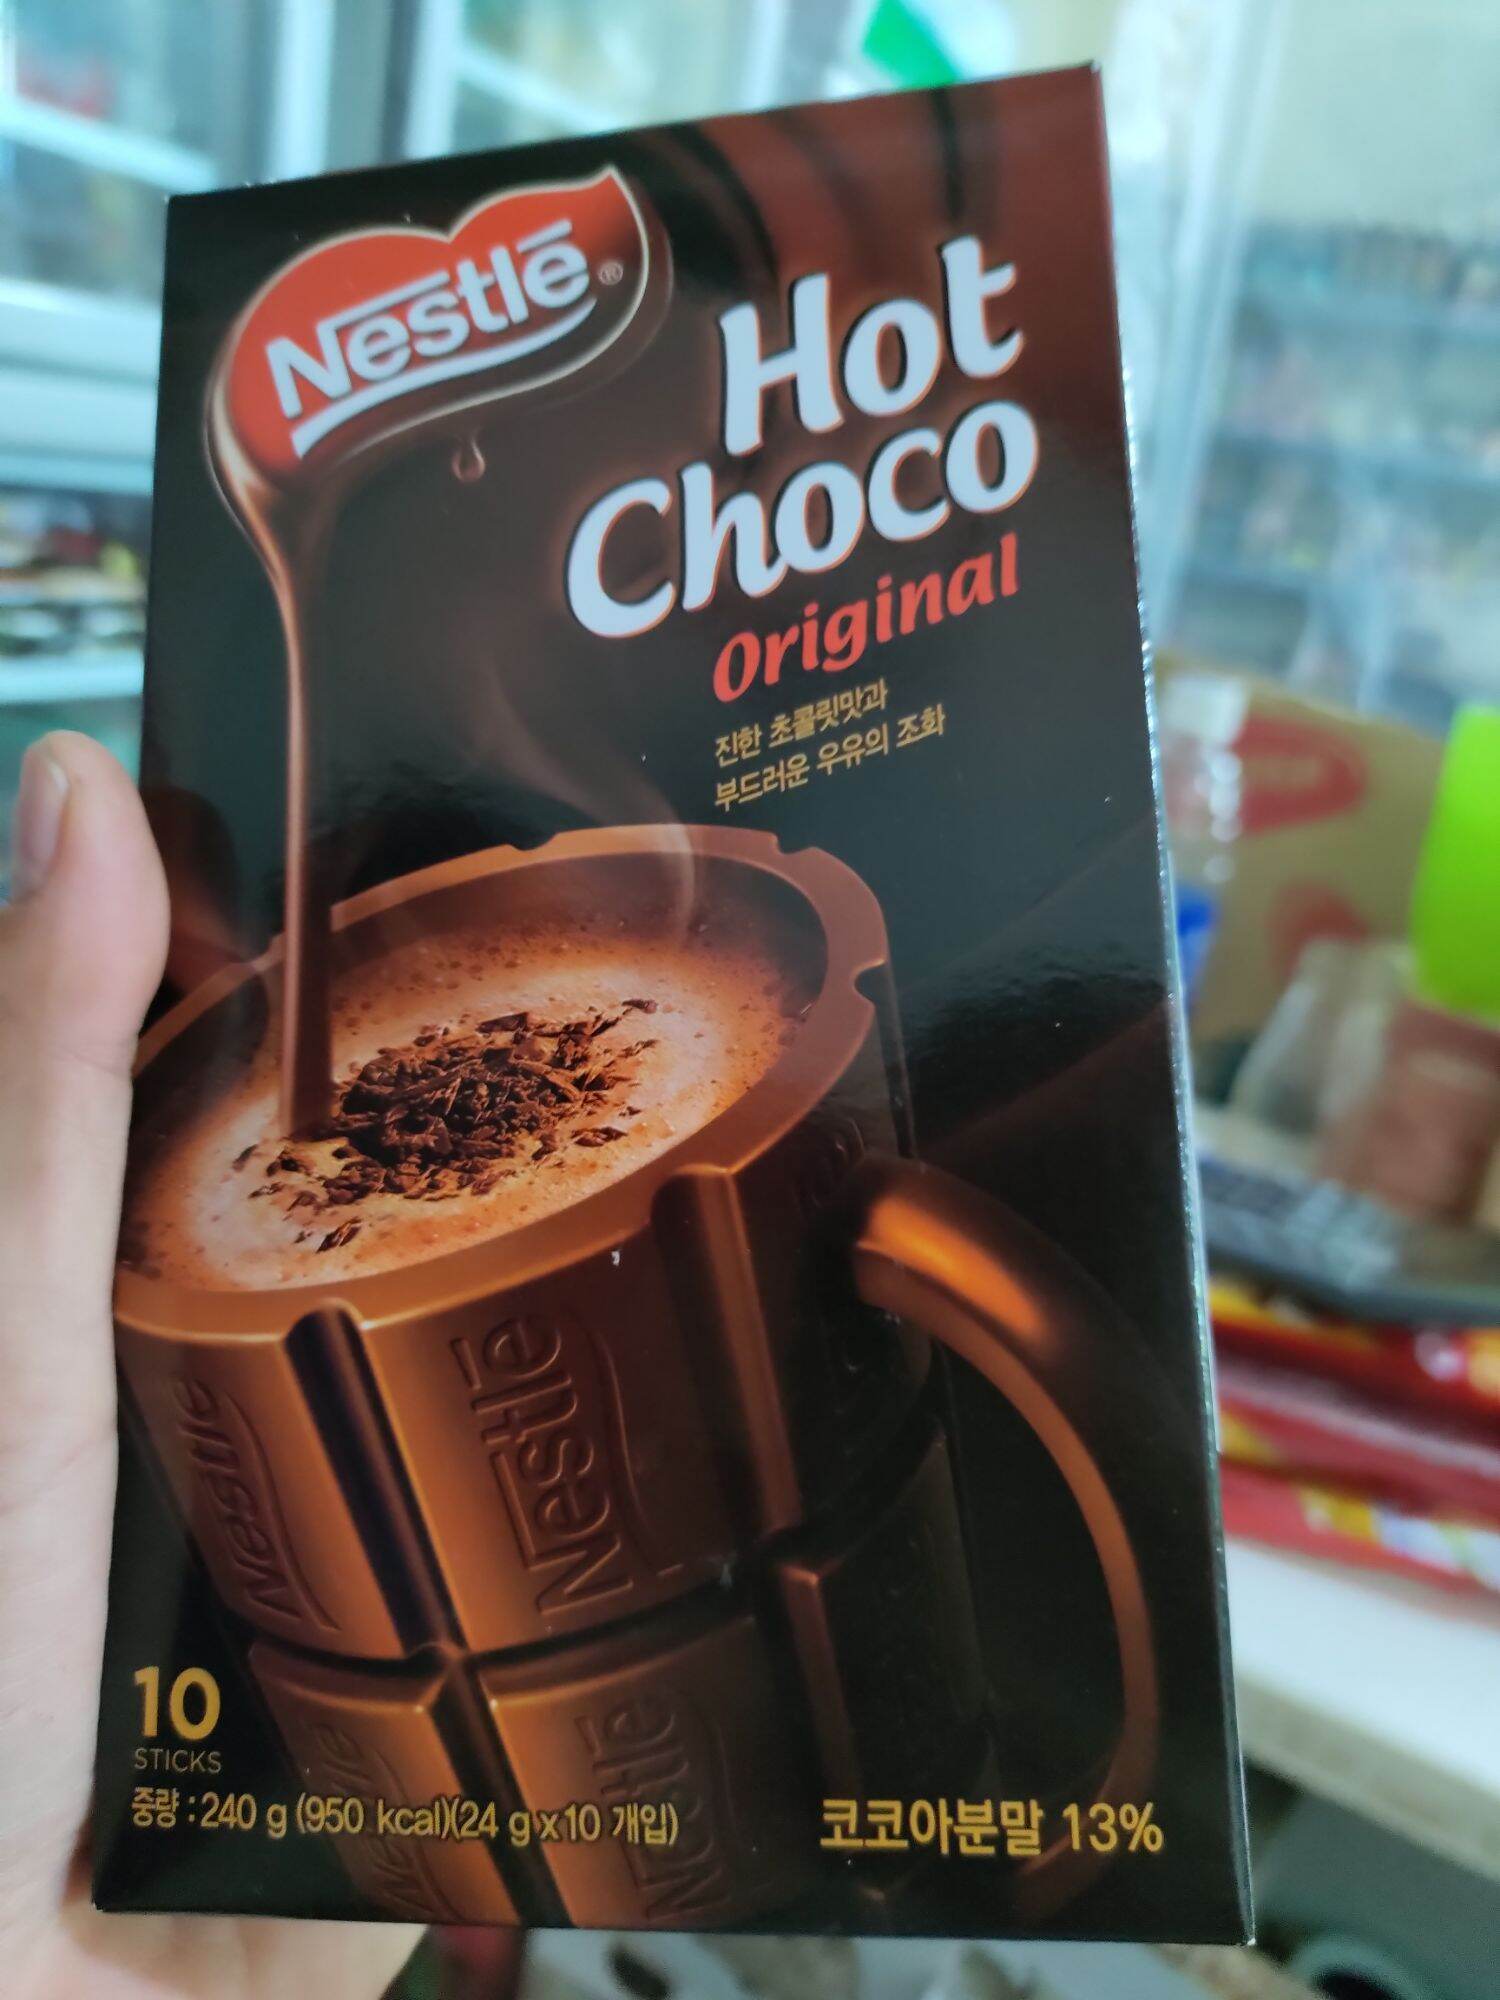 Hot Choco original Nestle 240g Hàn Quốc